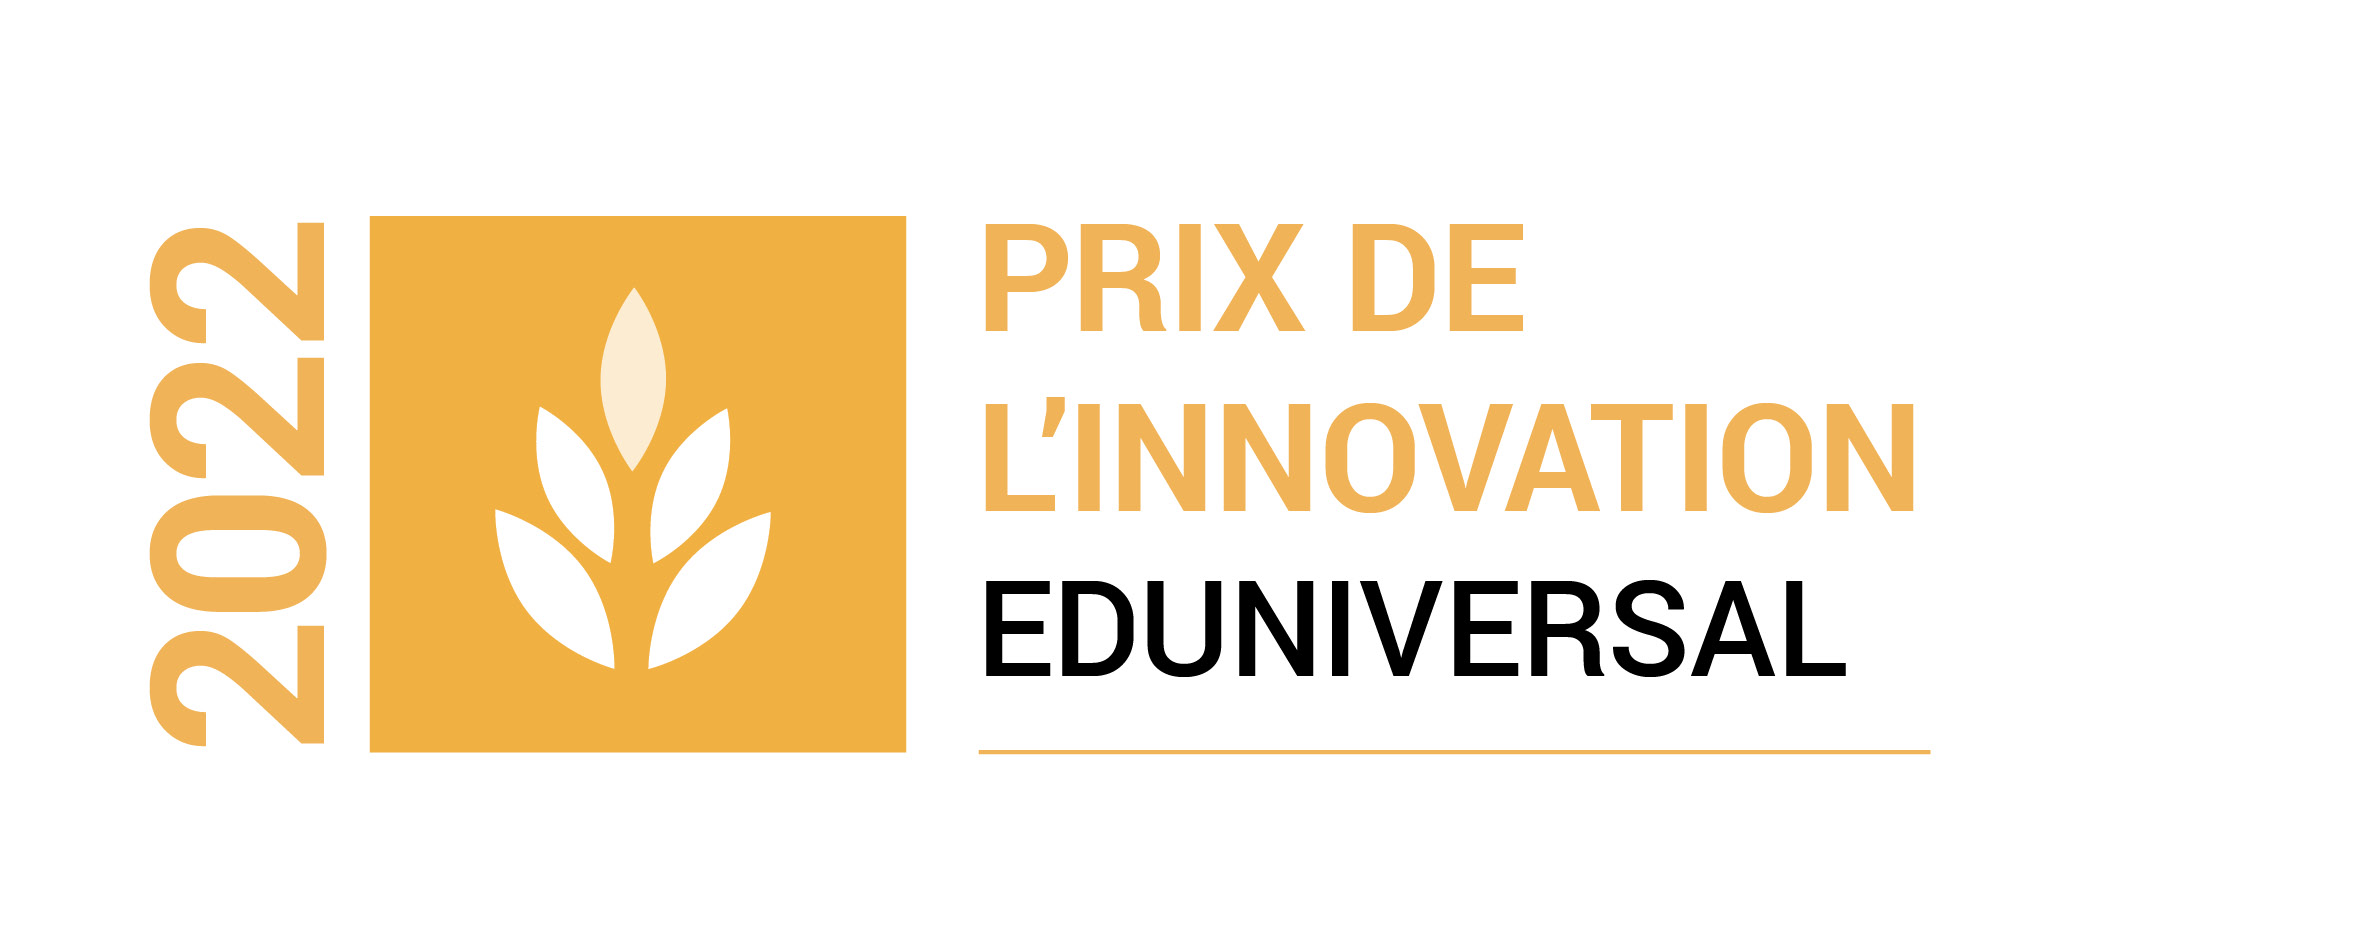 EDUNIVERSAL Innovation Prize